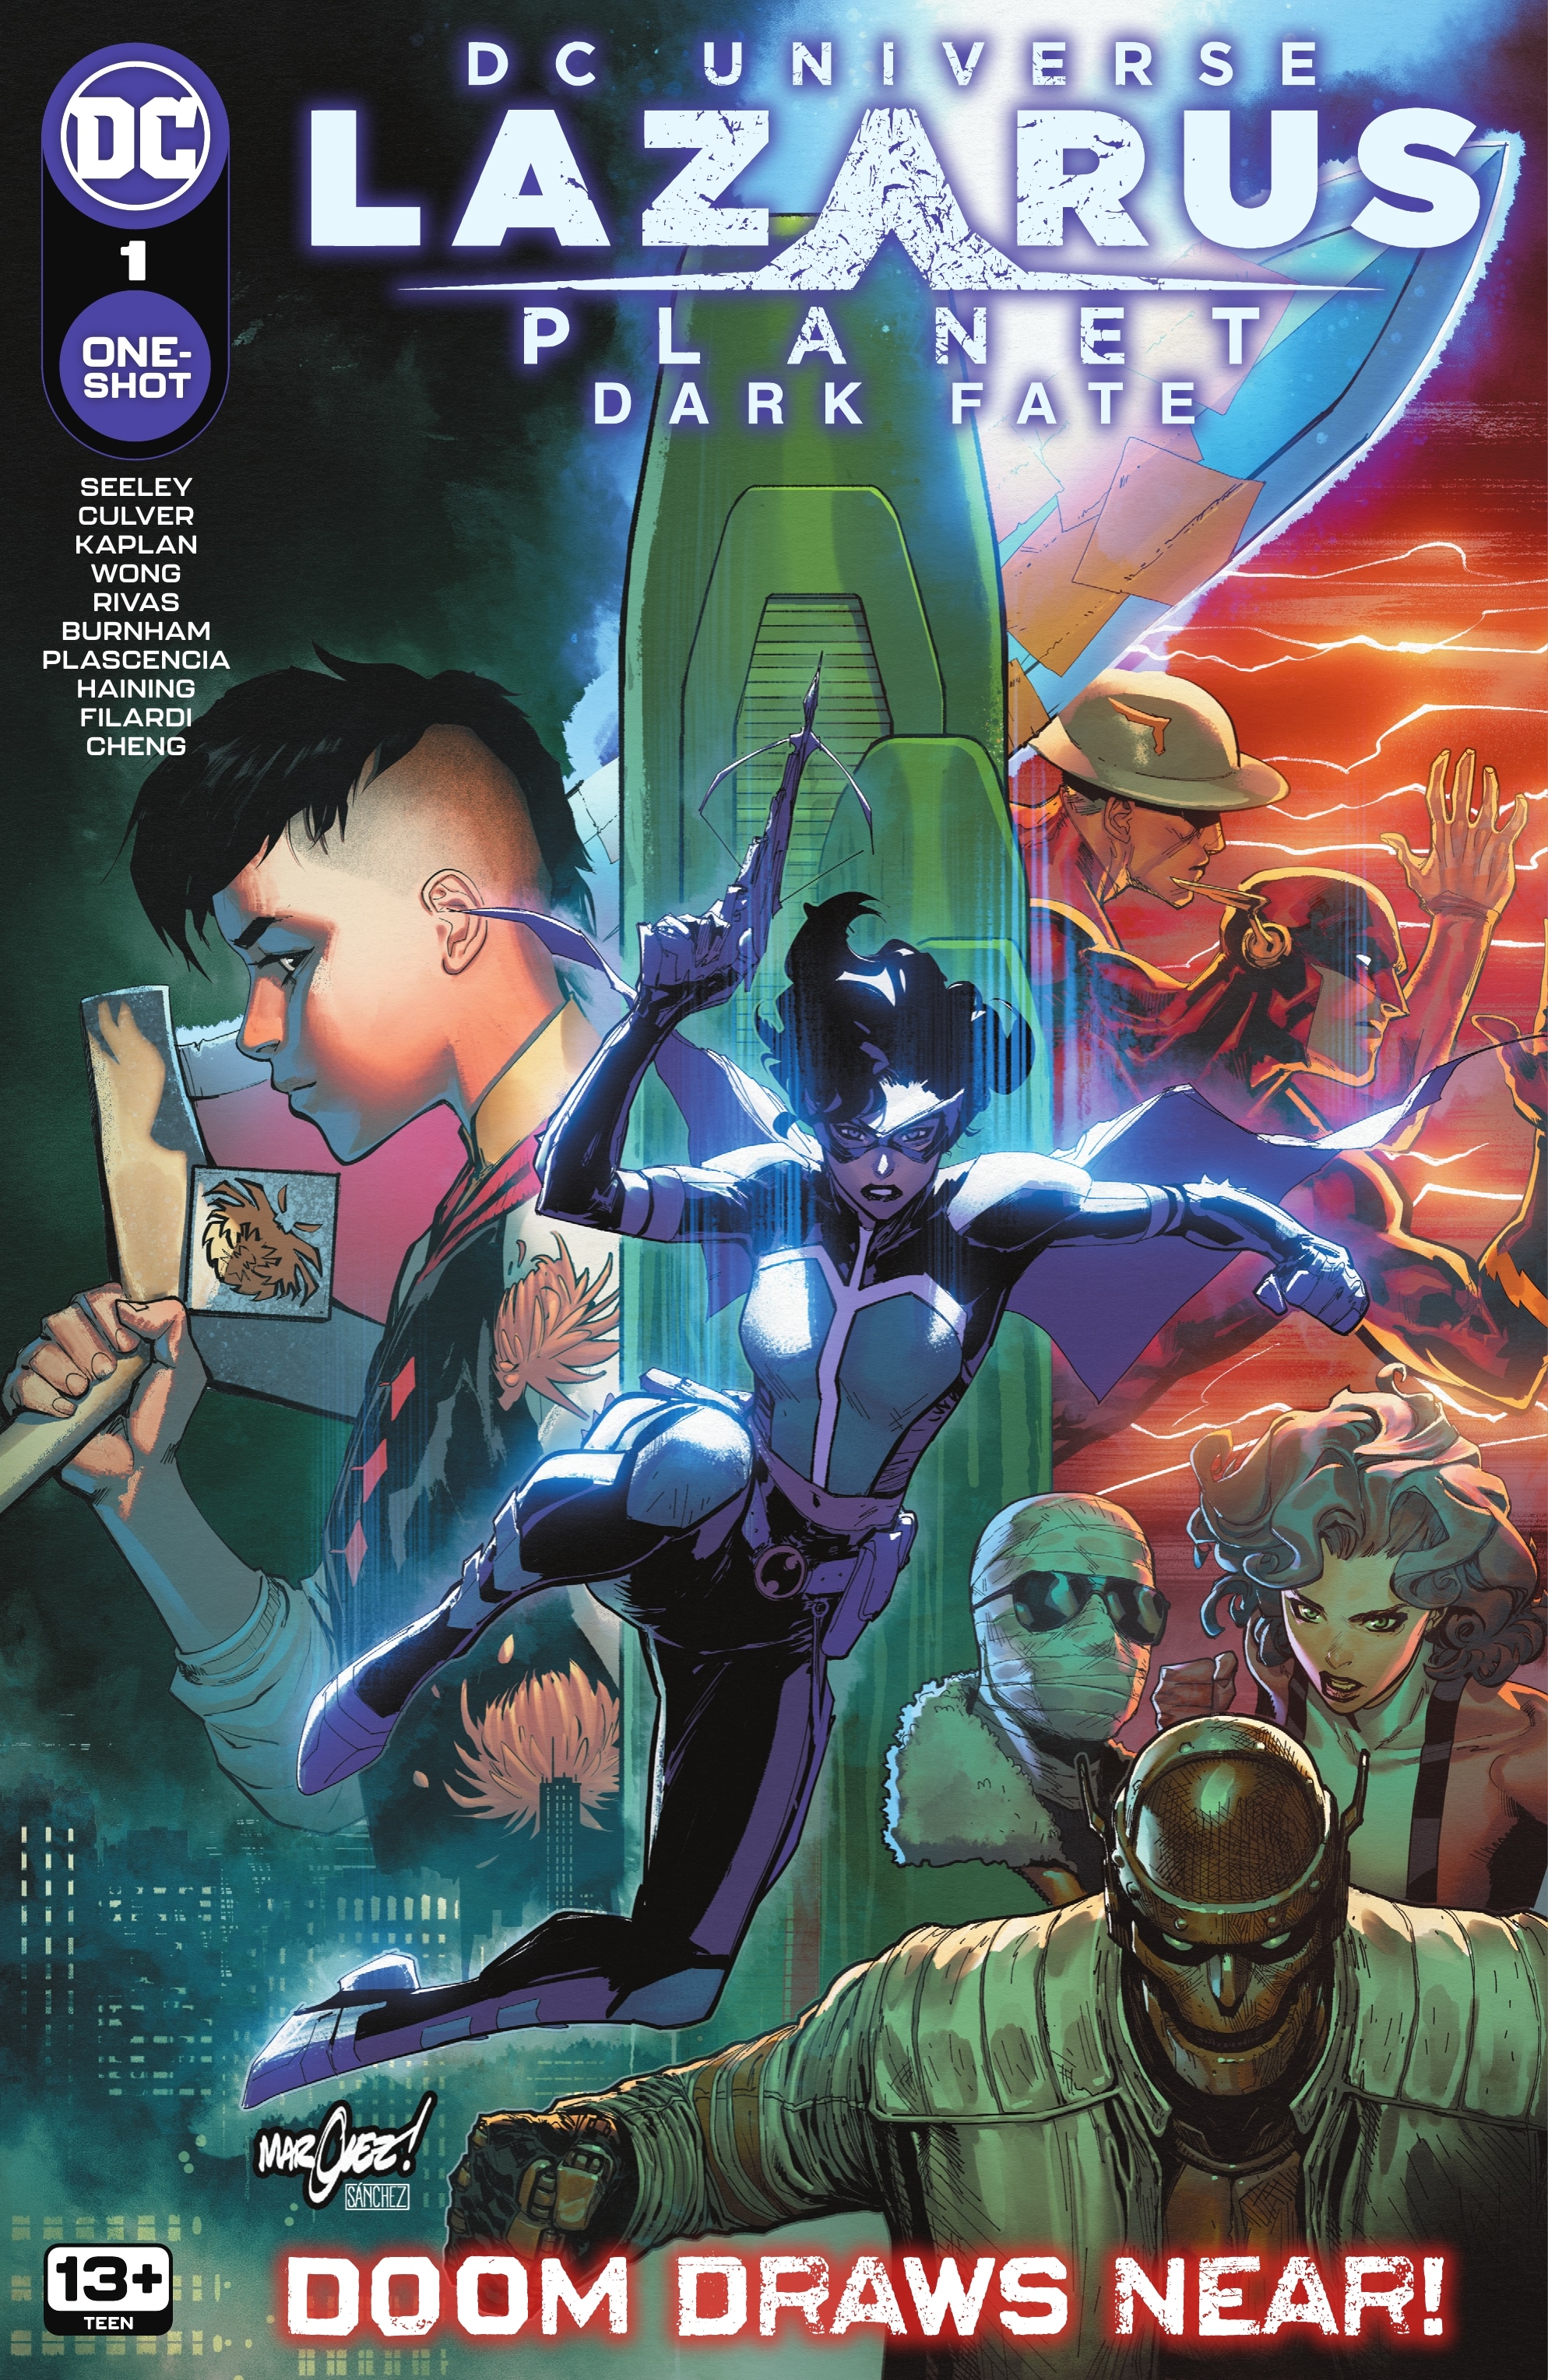 Read online Lazarus Planet: Dark Fate comic -  Issue # Full - 1